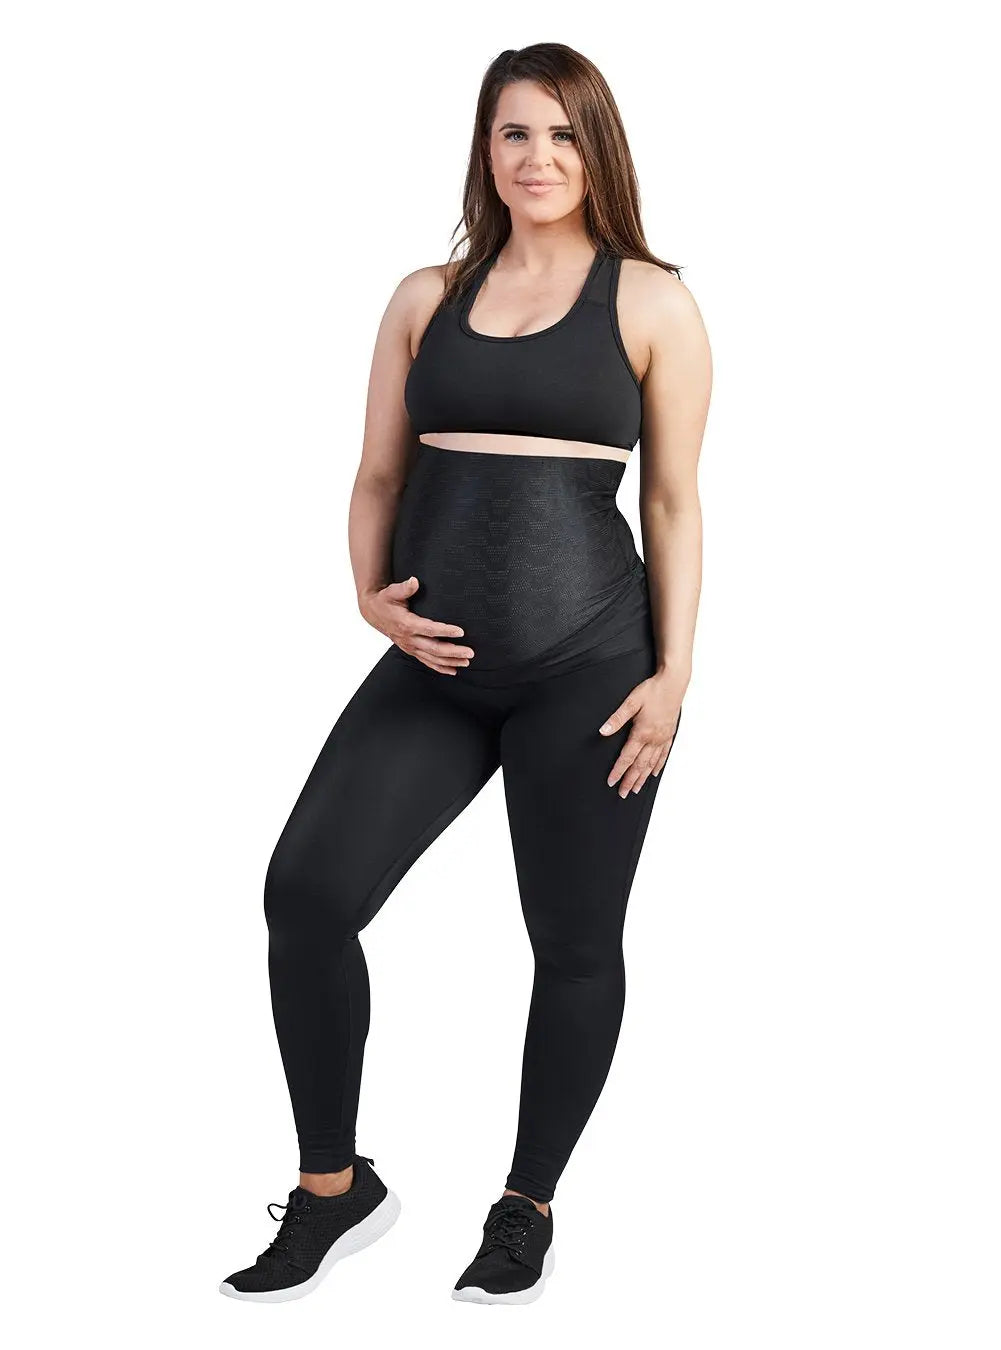 Supacore Women's Coretech Jenny Pregnancy Support Leggings